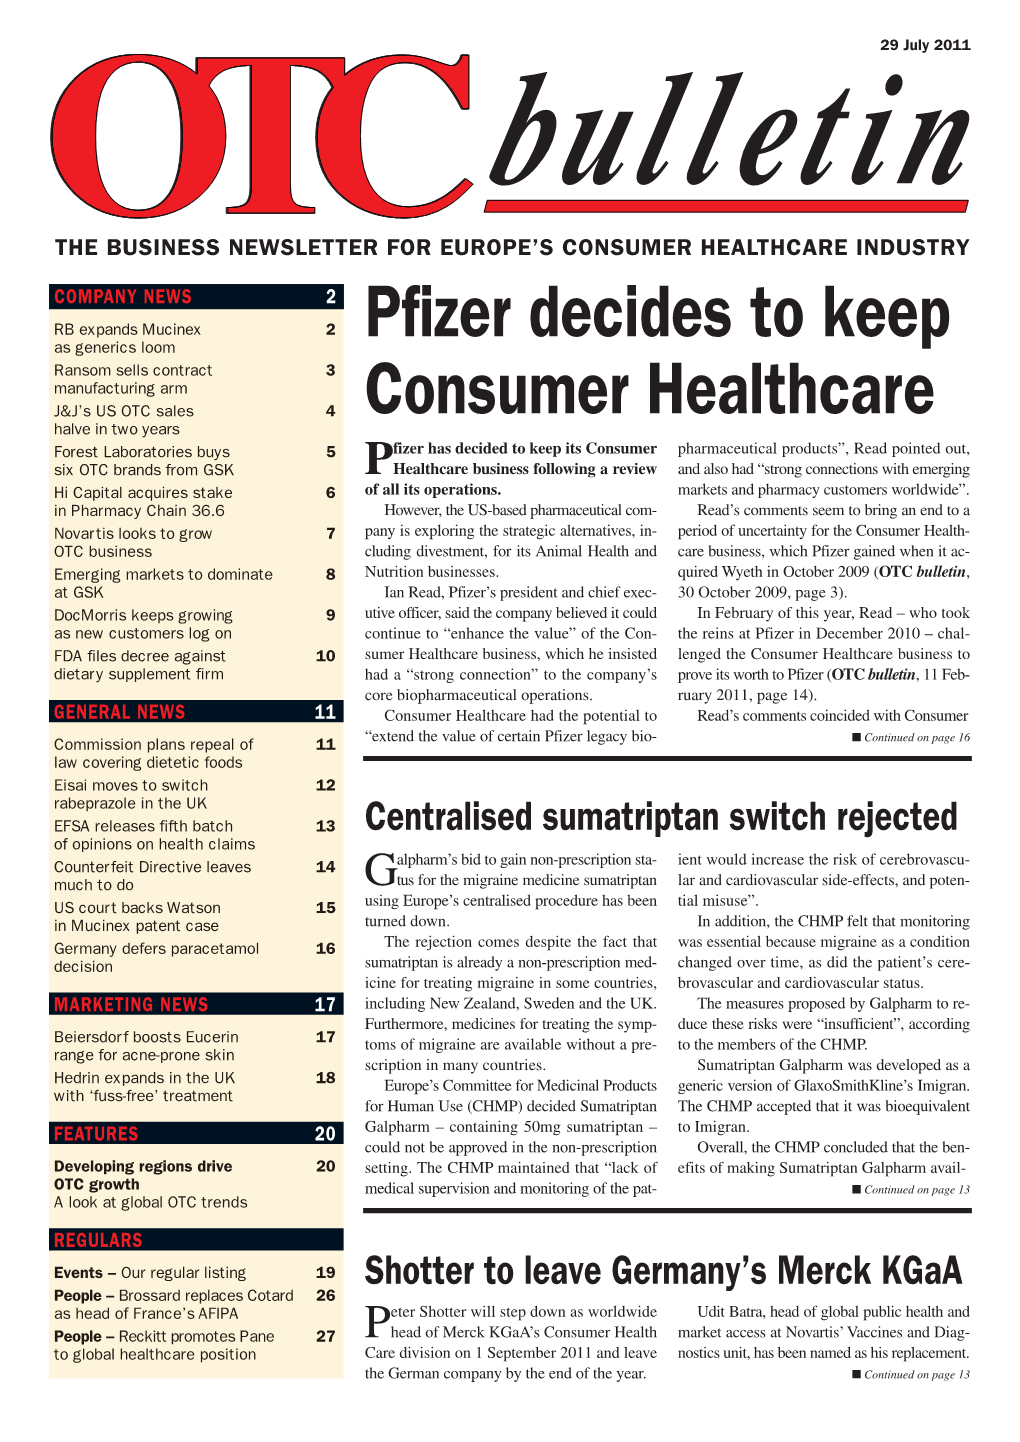 Pfizer Decides to Keep Consumer Healthcare